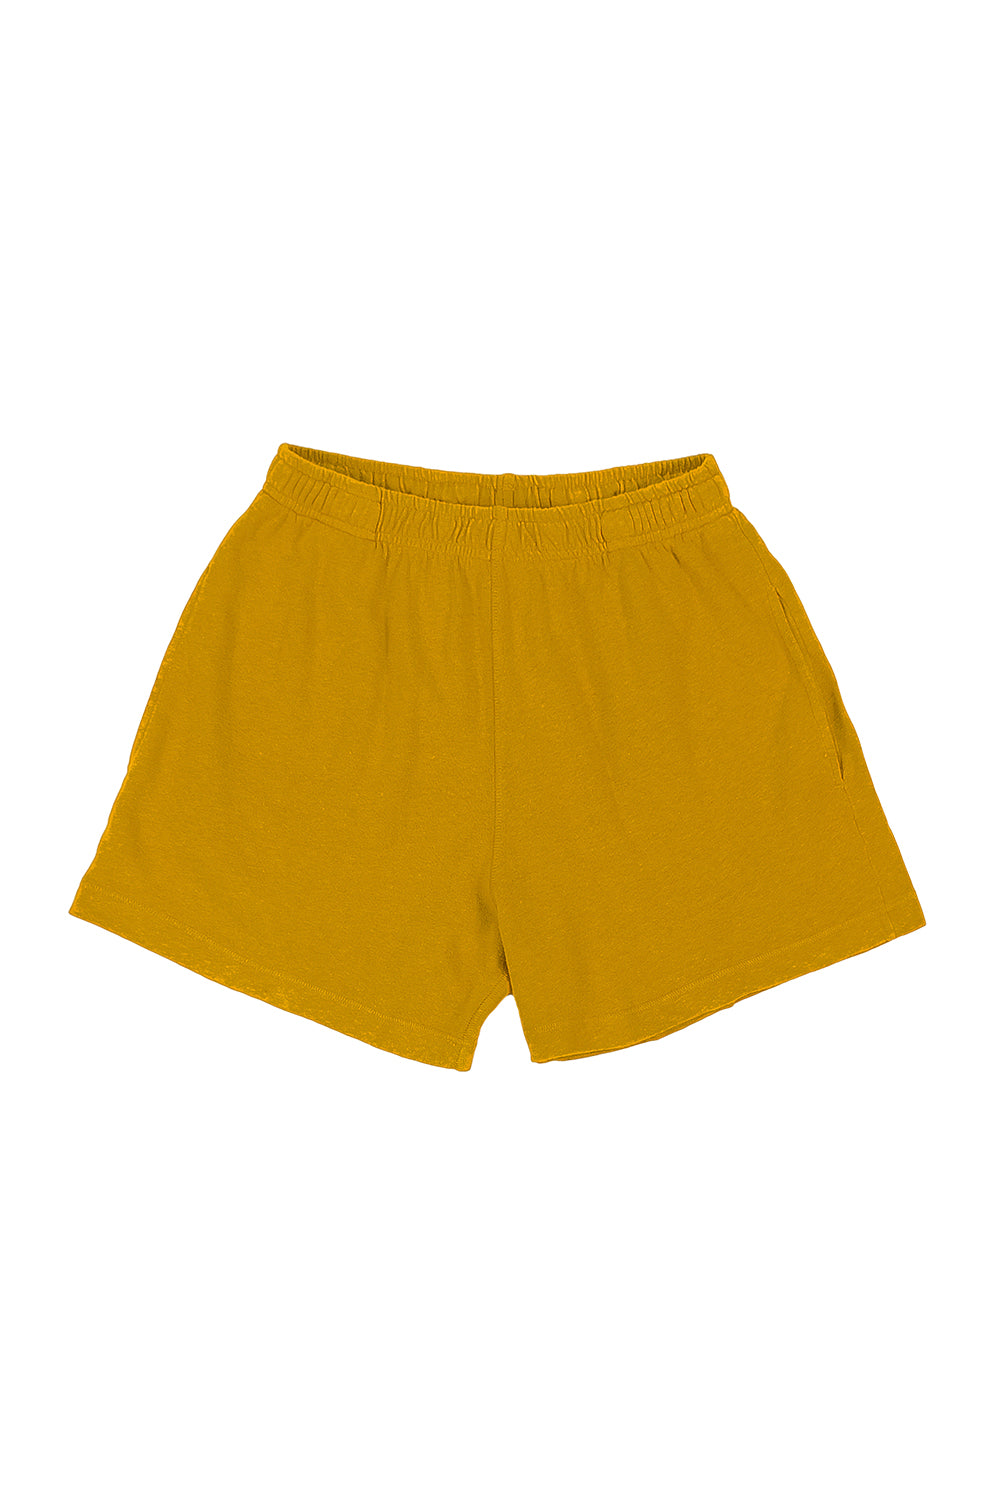 Sun Short | Jungmaven Hemp Clothing & Accessories / Color: Spicy Mustard